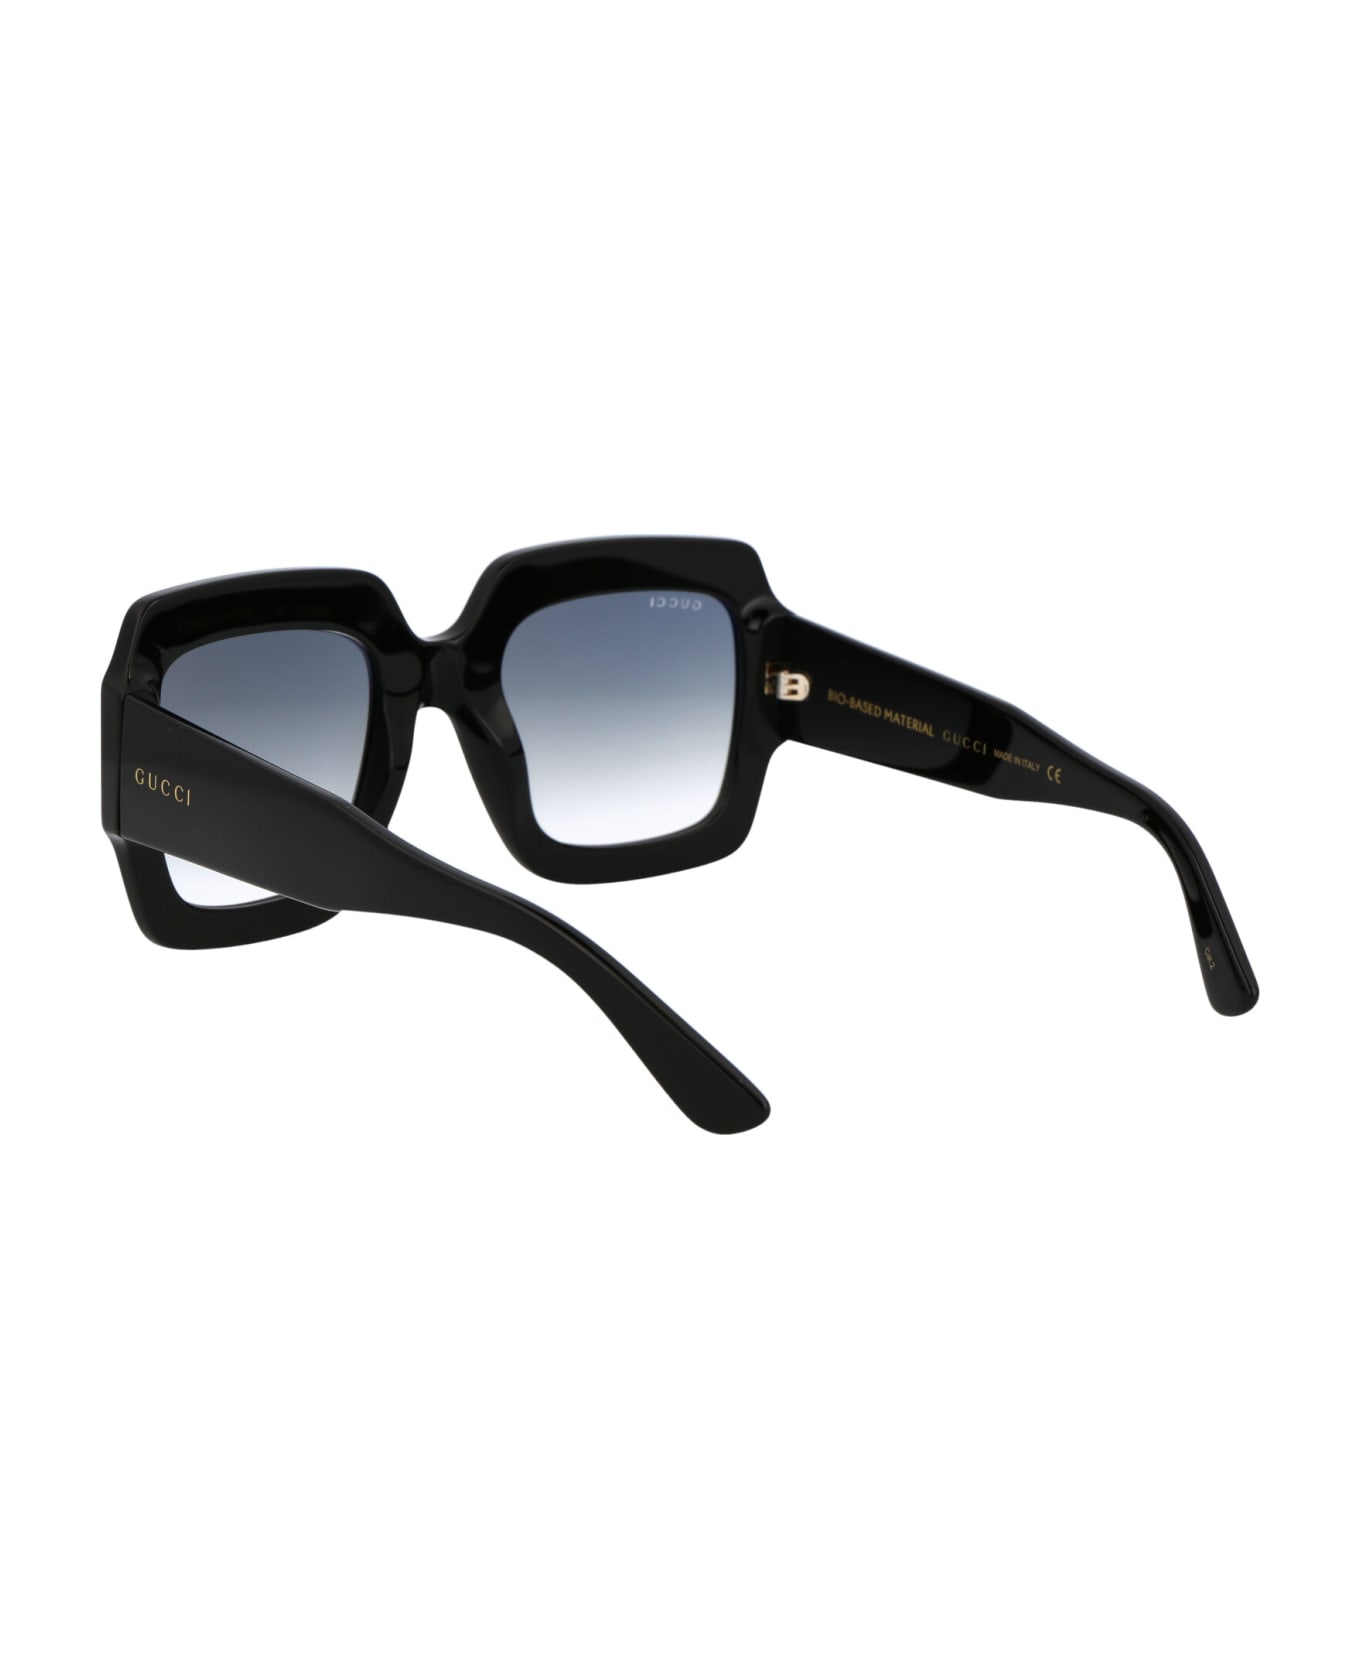 Gucci Eyewear Gg1111s Sunglasses - 001 BLACK BLACK GREY